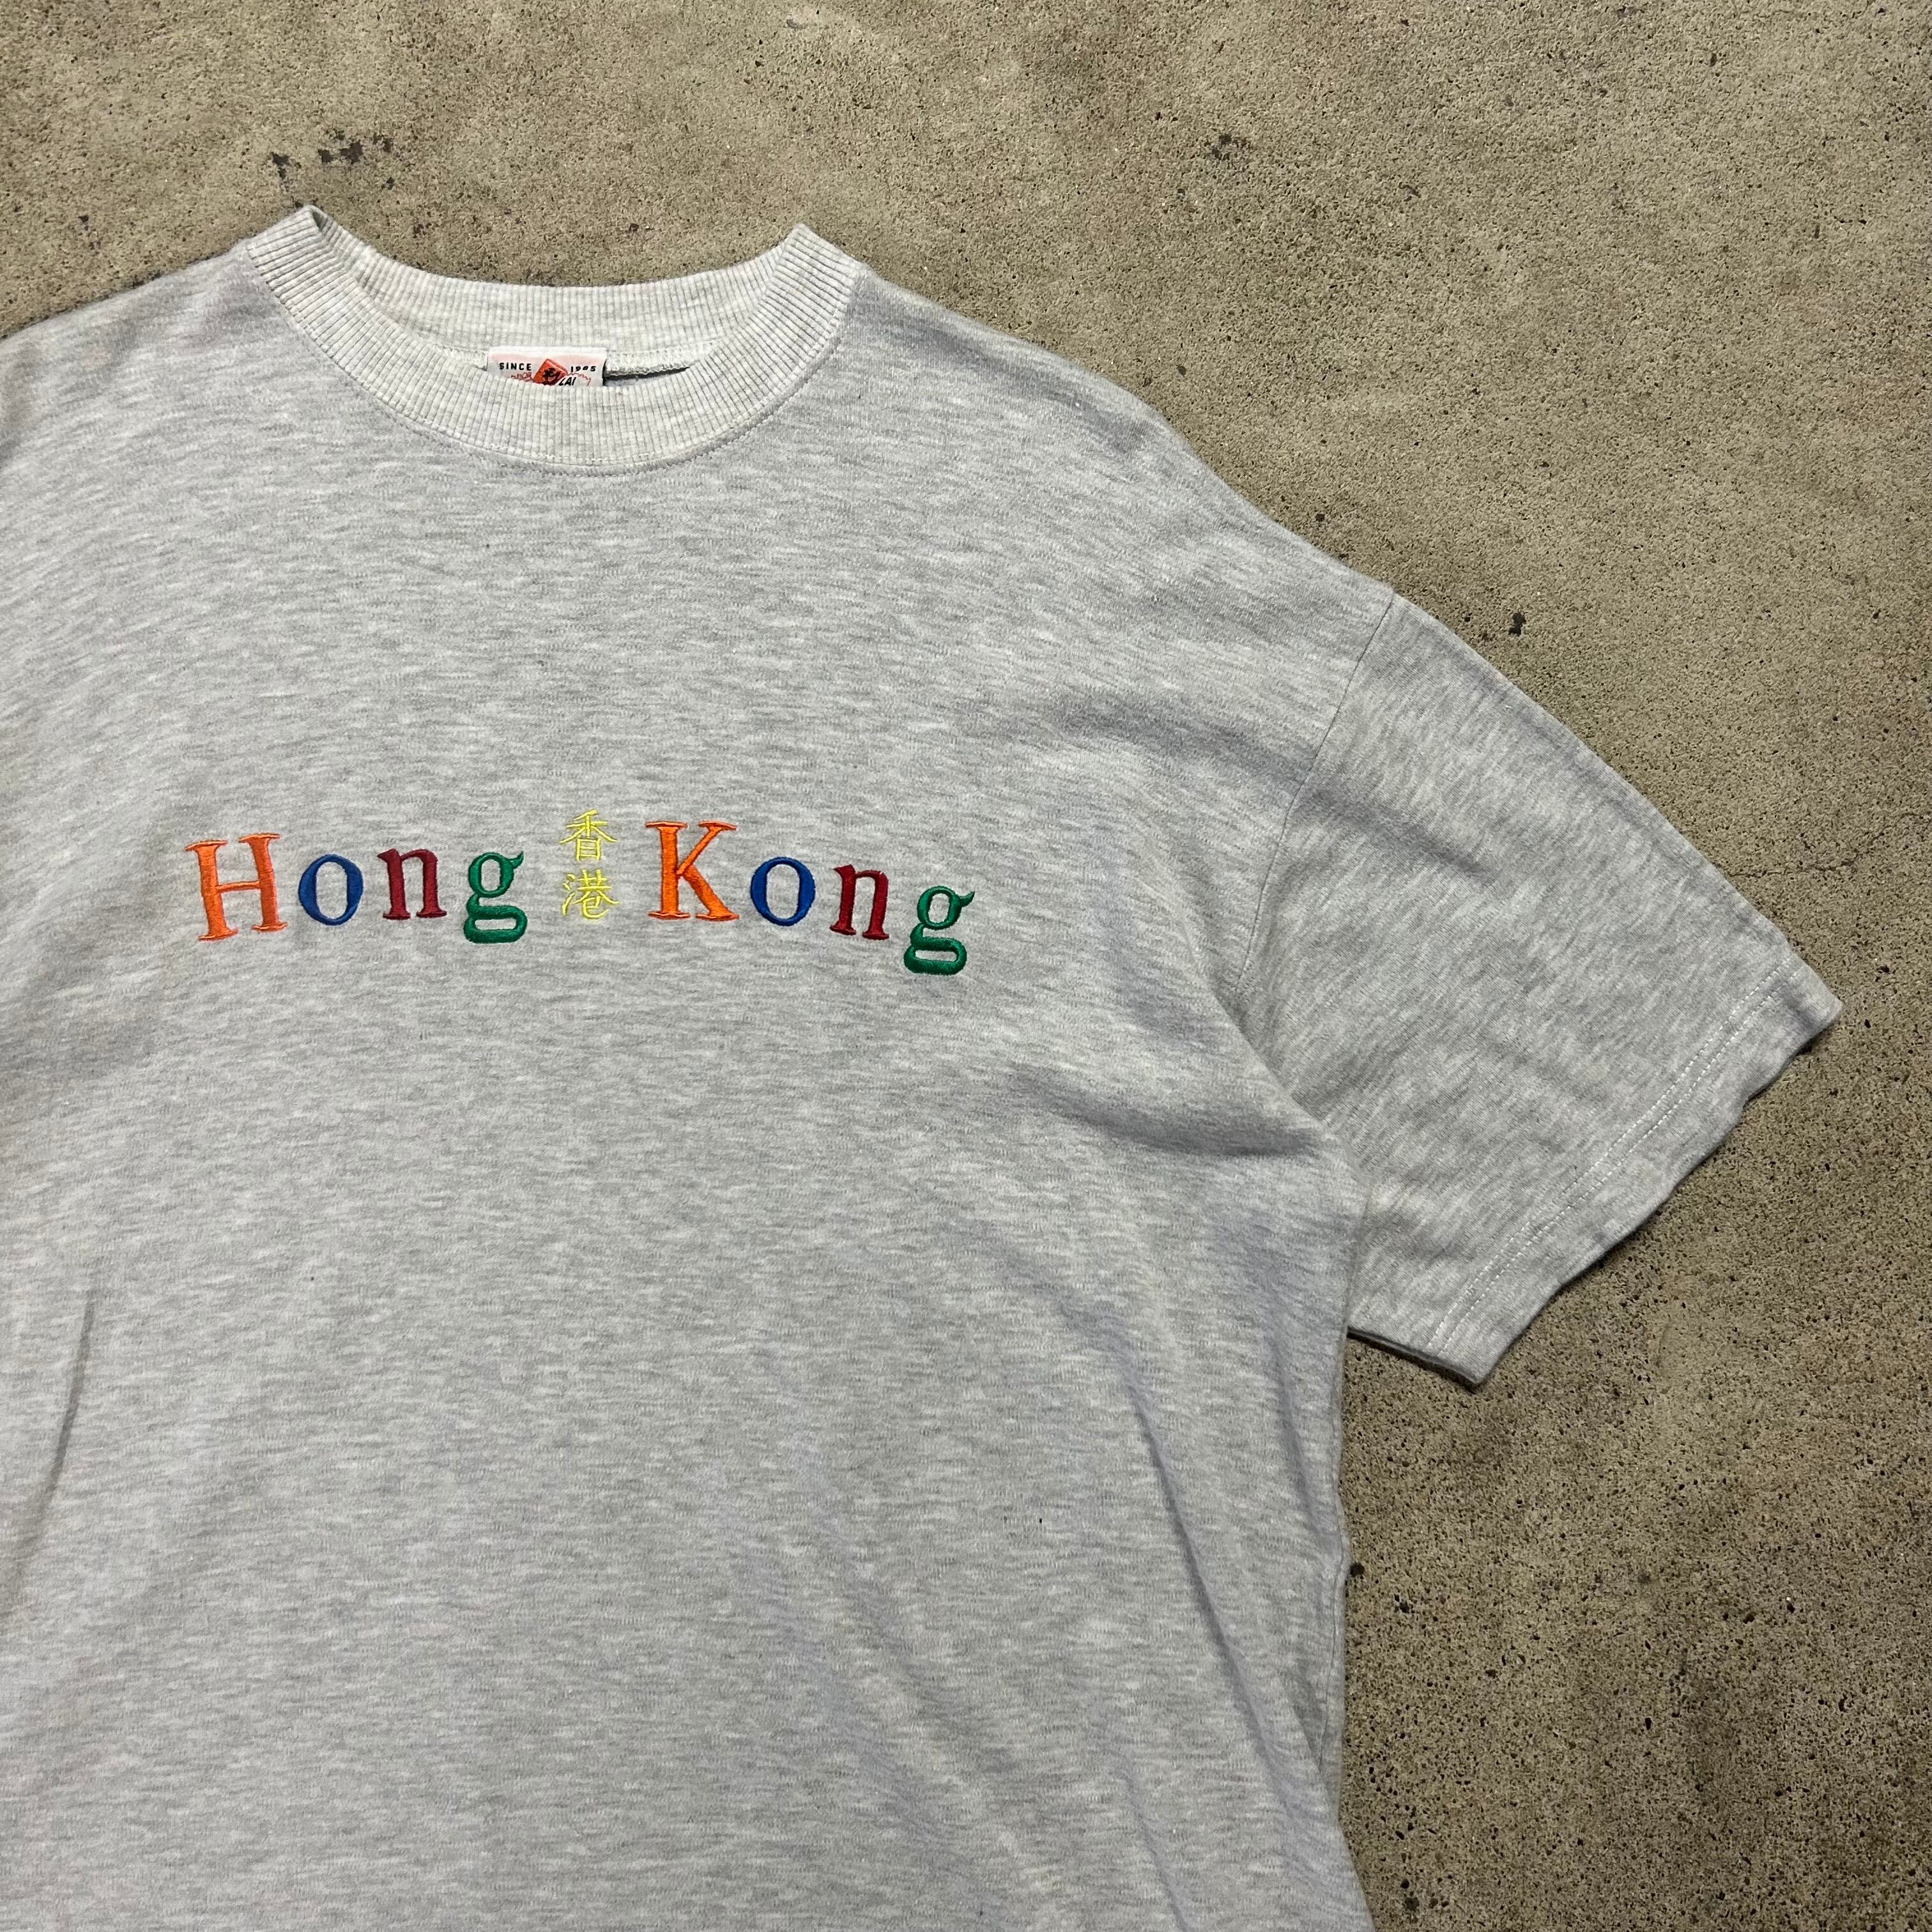 LAI SEE SHIRTS Hong Kong tee 香港 漢字 刺繍 Tシャツ COMBED COTTON